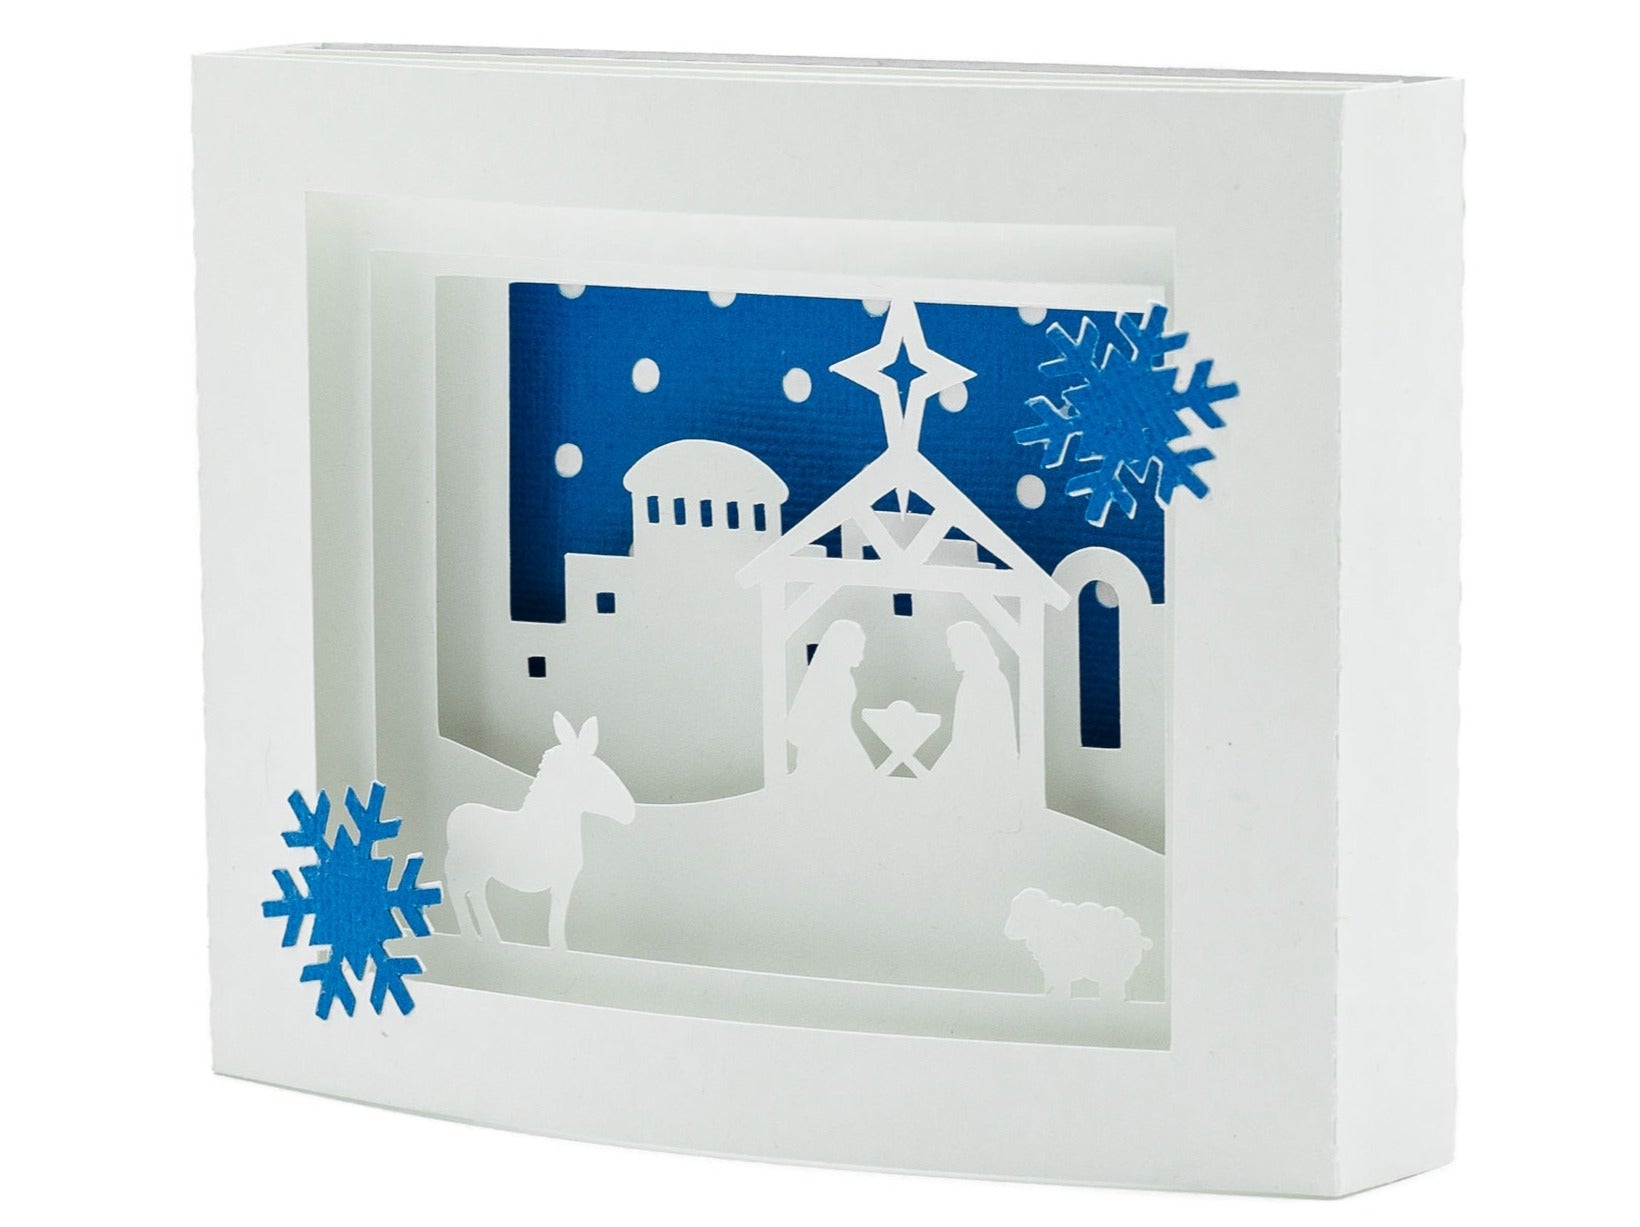 Nativity Silent Night Over Jerusalem Christmas Shadow Box Pop Up 3D Greeting Card